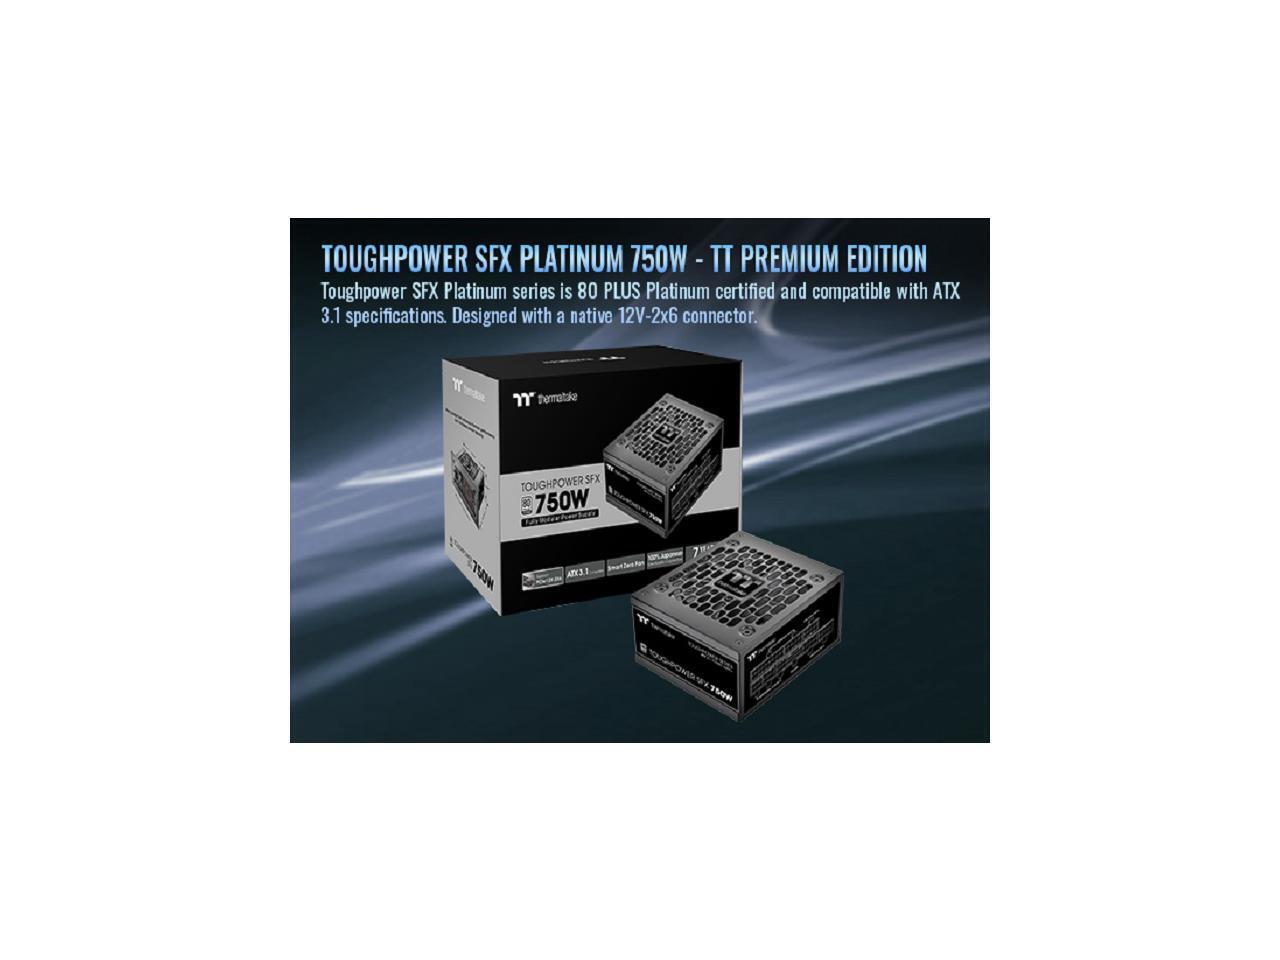 Thermaltake Toughpower SFX 750W 80Plus Platinum ATX 3.1 300W 12V-2x6 Connector I